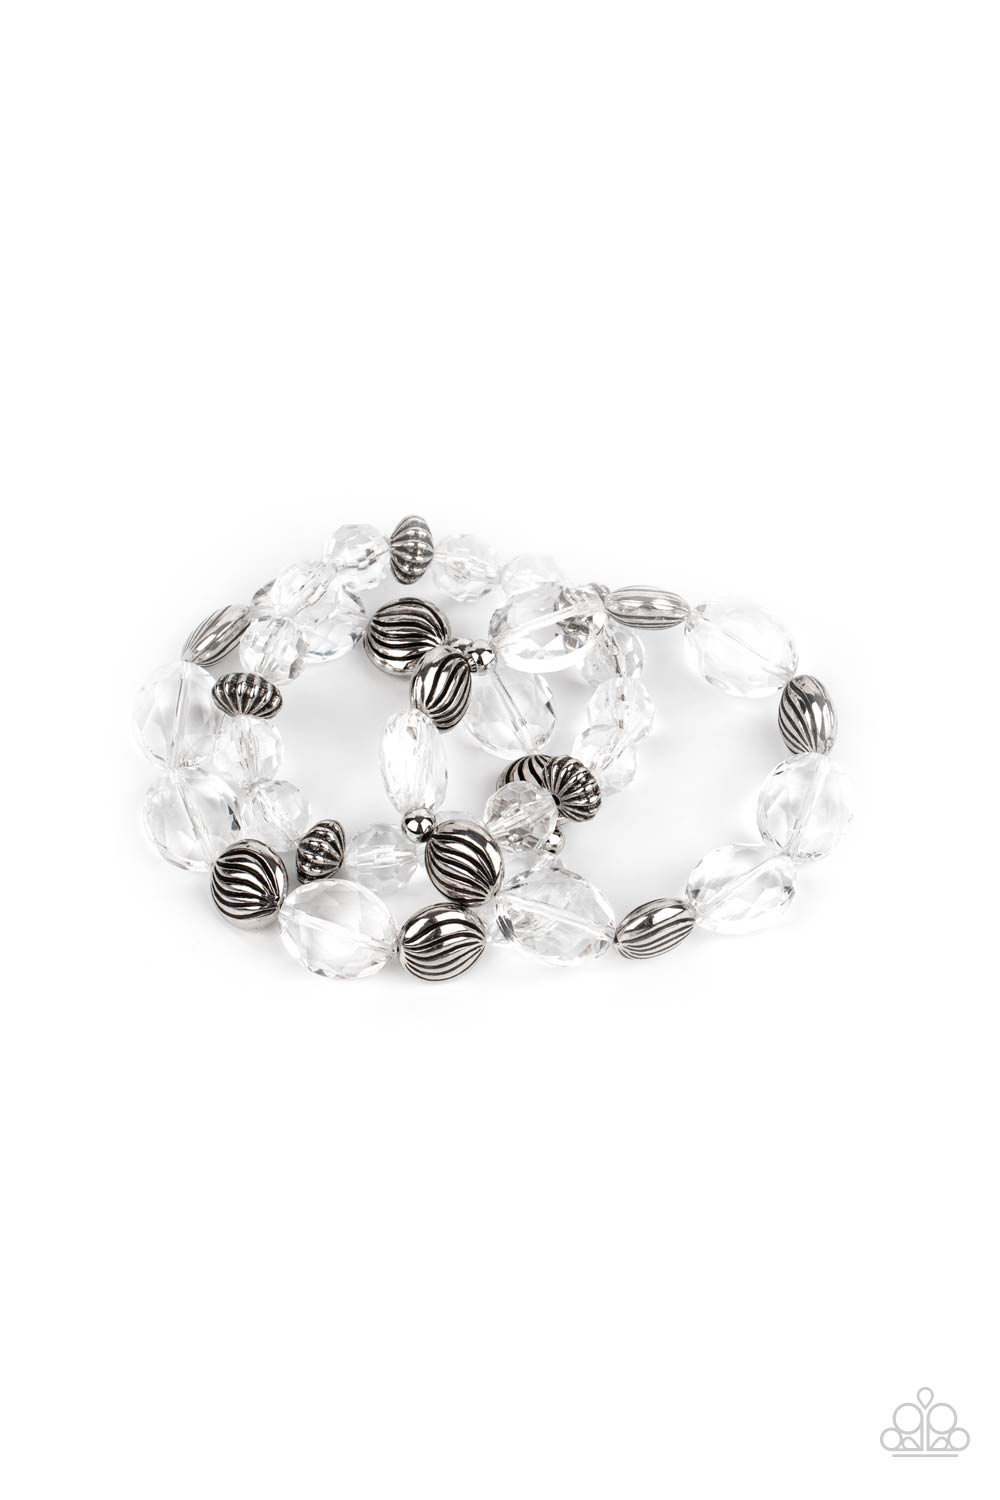 Crystal Charisma - White Bracelet freeshipping - JewLz4u Gemstone Gallery